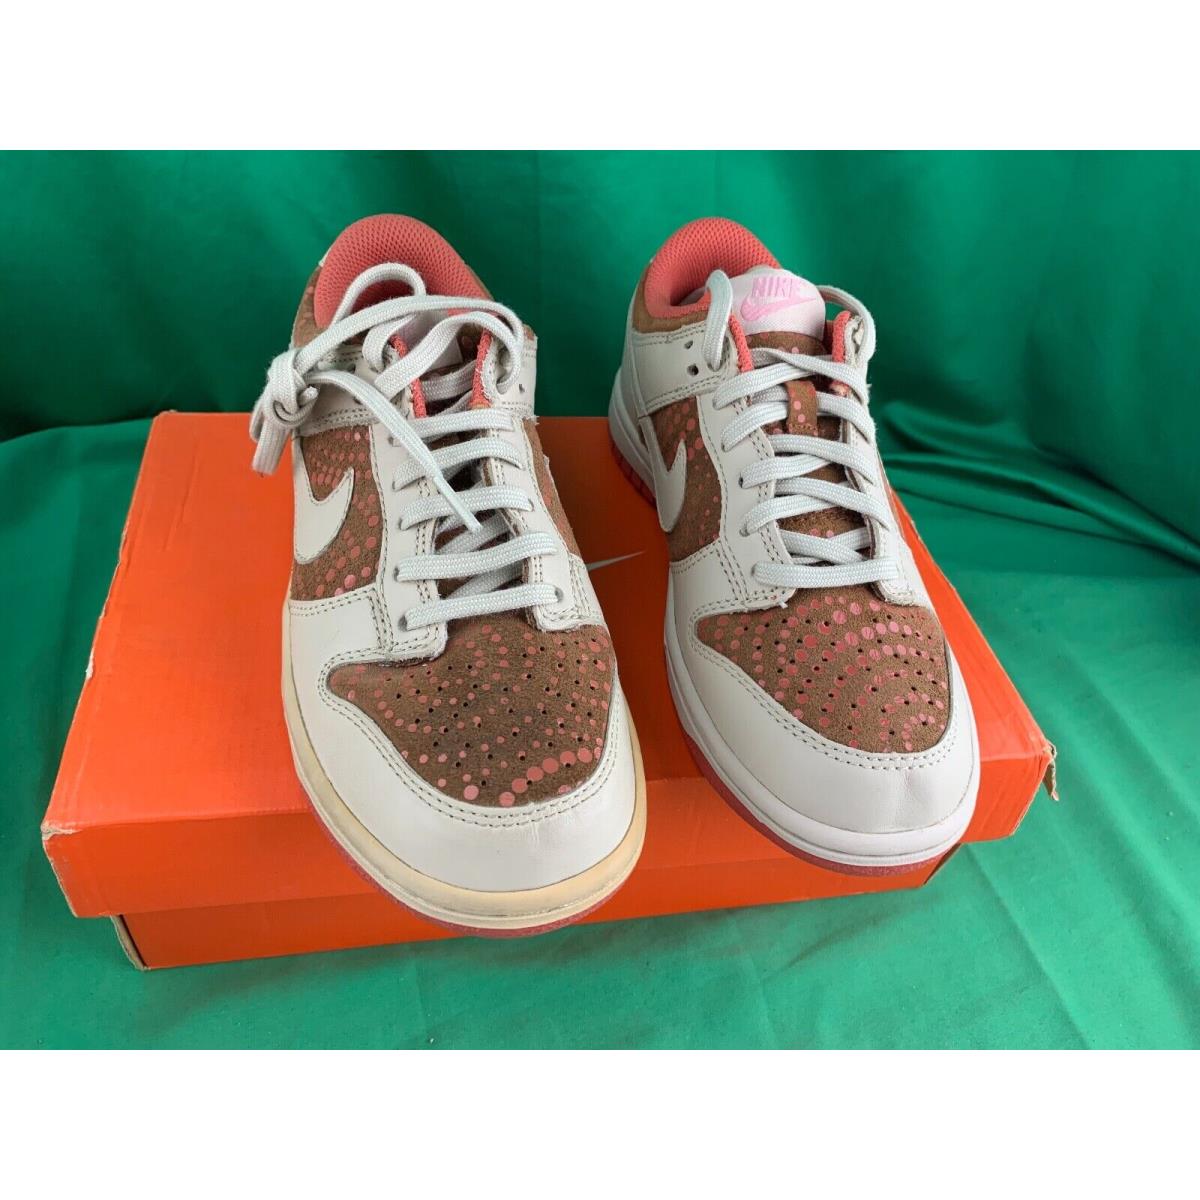 Nike Womens Dunk Low Cognac Sneakers Beige Brown 309324-212 Lace Up Shoes Sz 5.5